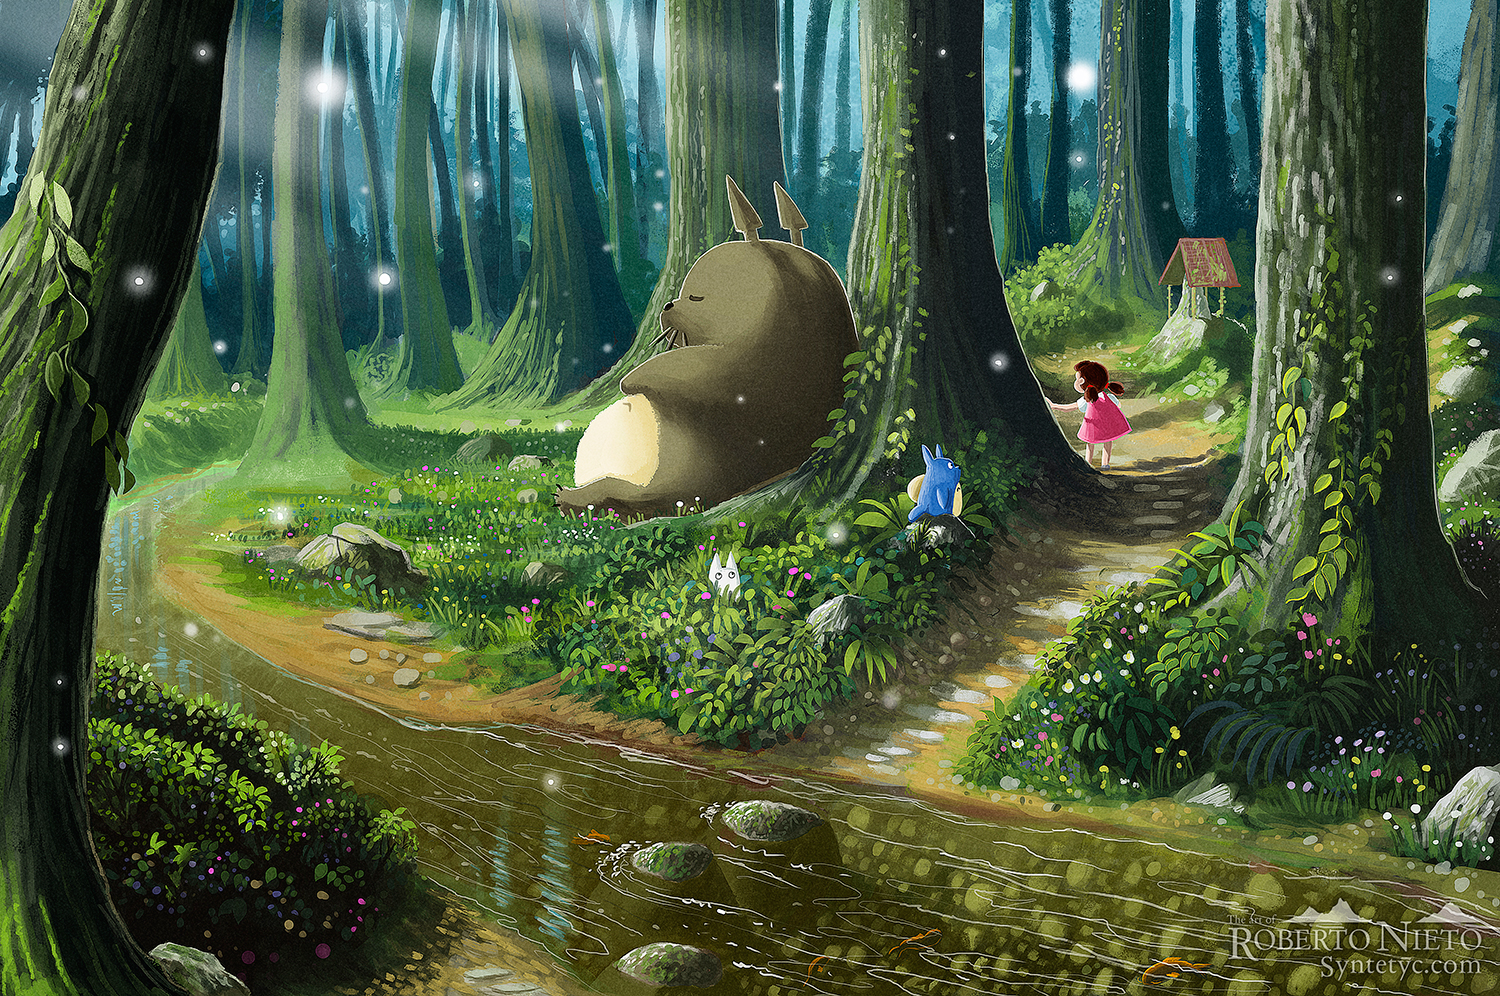 Download Neighbor Totoro Wallpaper 1500x996 | Full HD Wallpapers